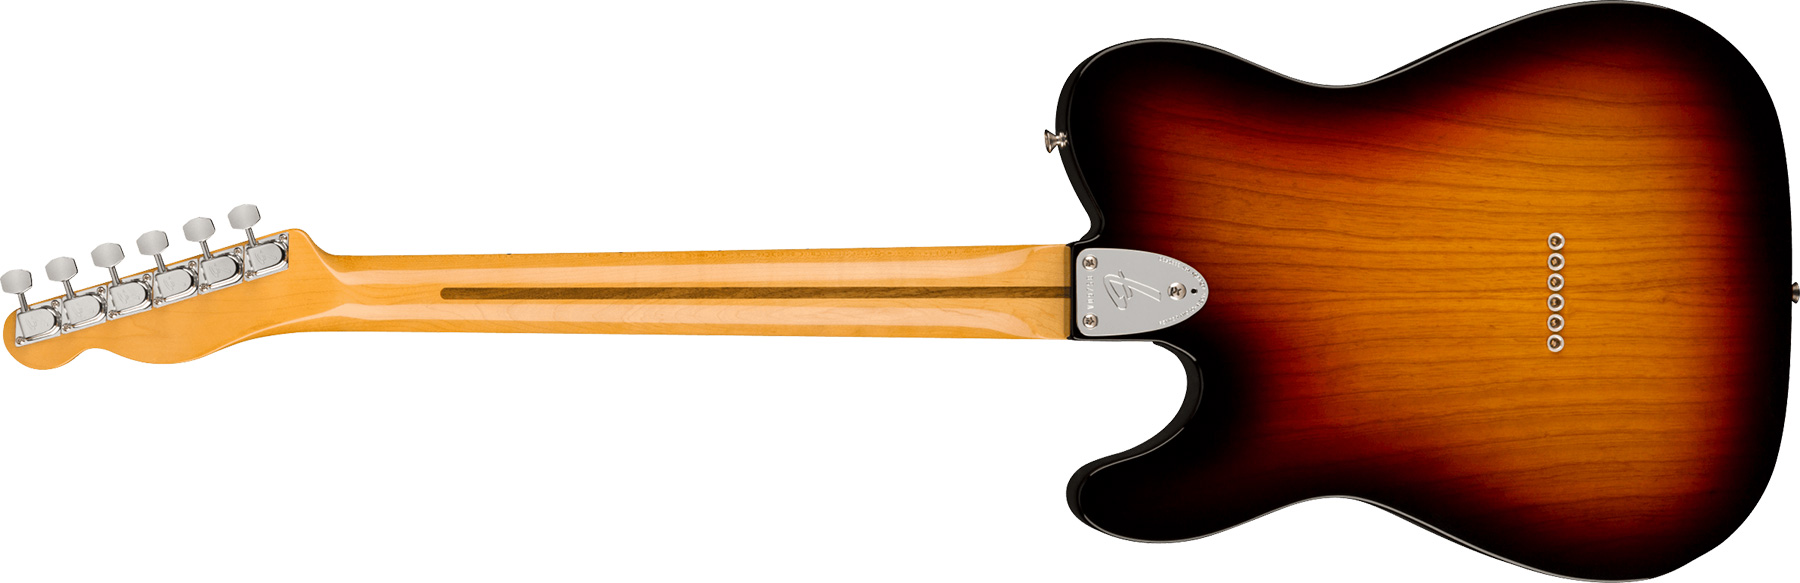 Fender Tele Thinline 1972 American Vintage Ii Usa 2h Ht Mn - 3-color Sunburst - Tel shape electric guitar - Variation 1